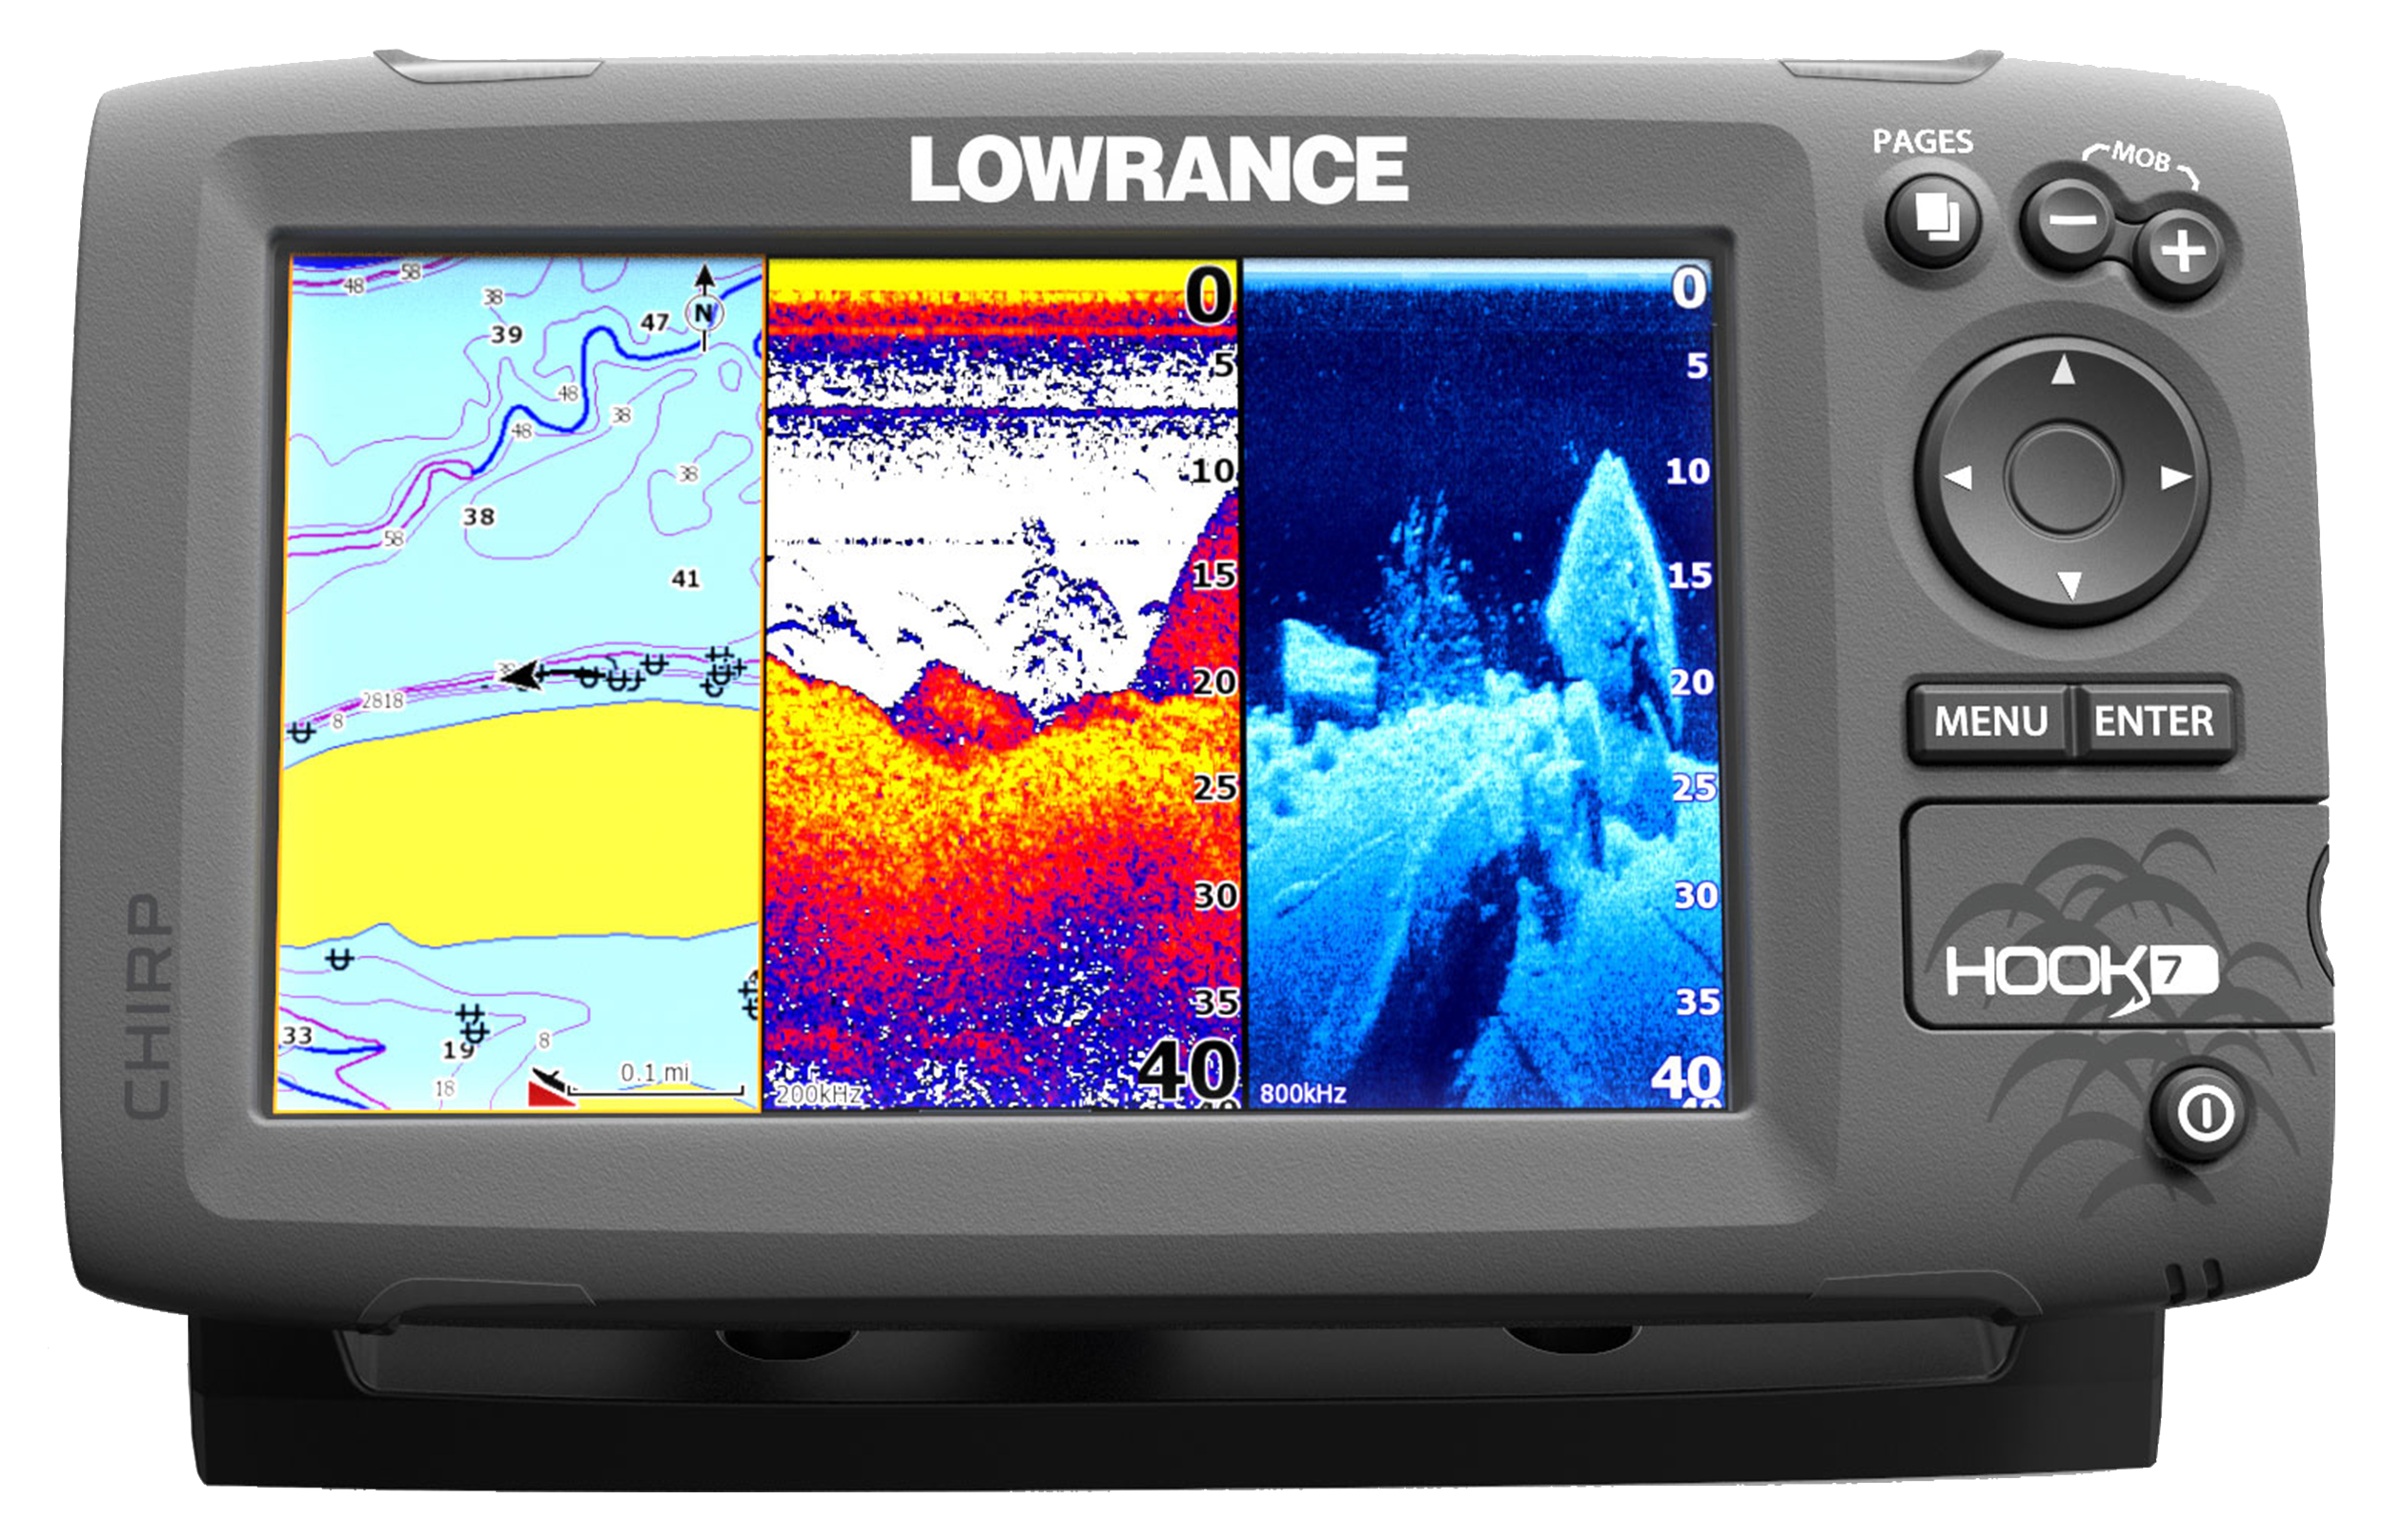 Lowrance Hook-7 Fishfinder/Chartplotter